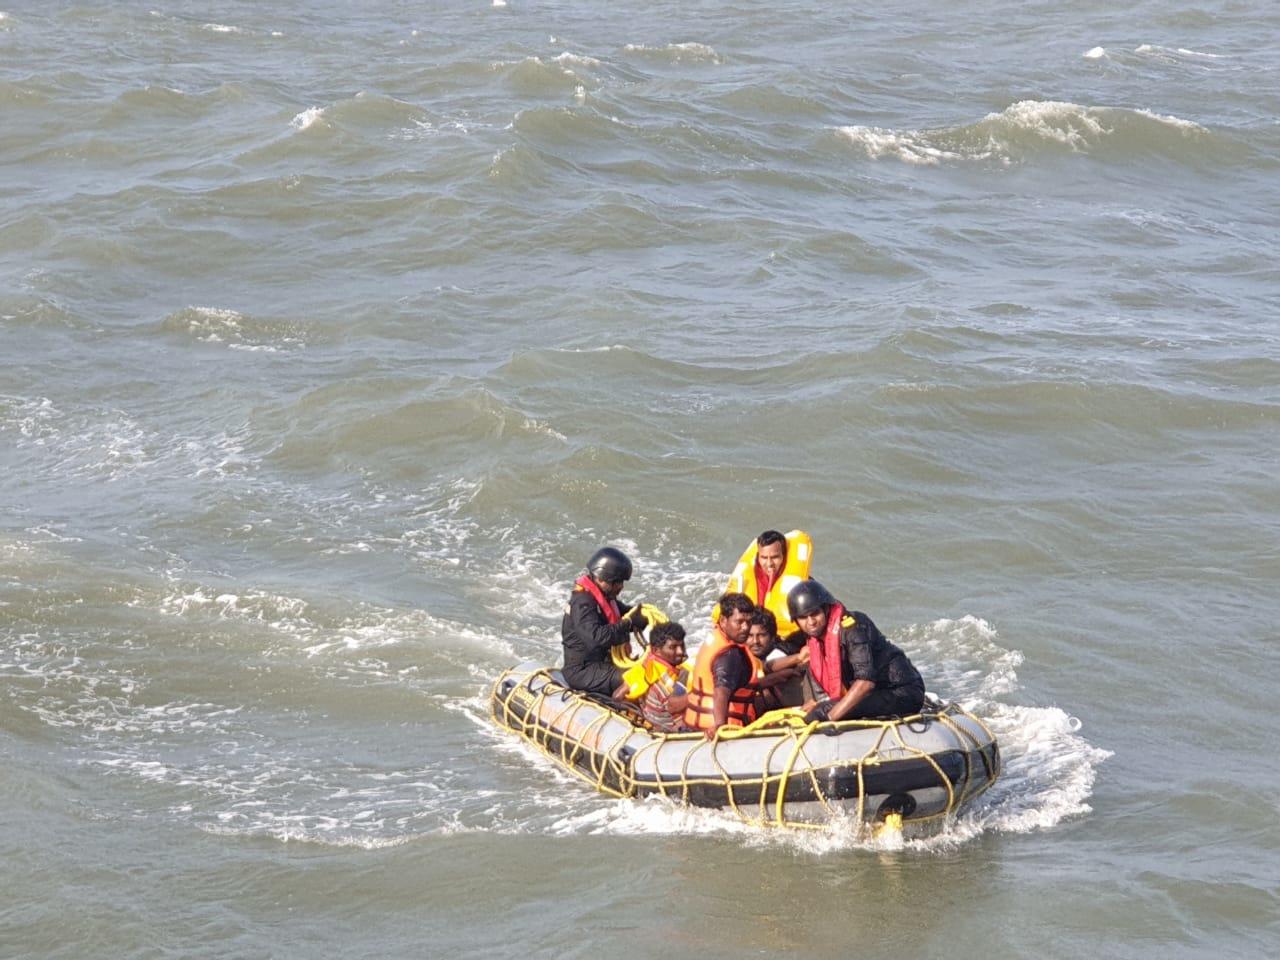 Cyclone Kyarr over Arabian Sea: Indian Coast Guard rescues 19 fishermen 